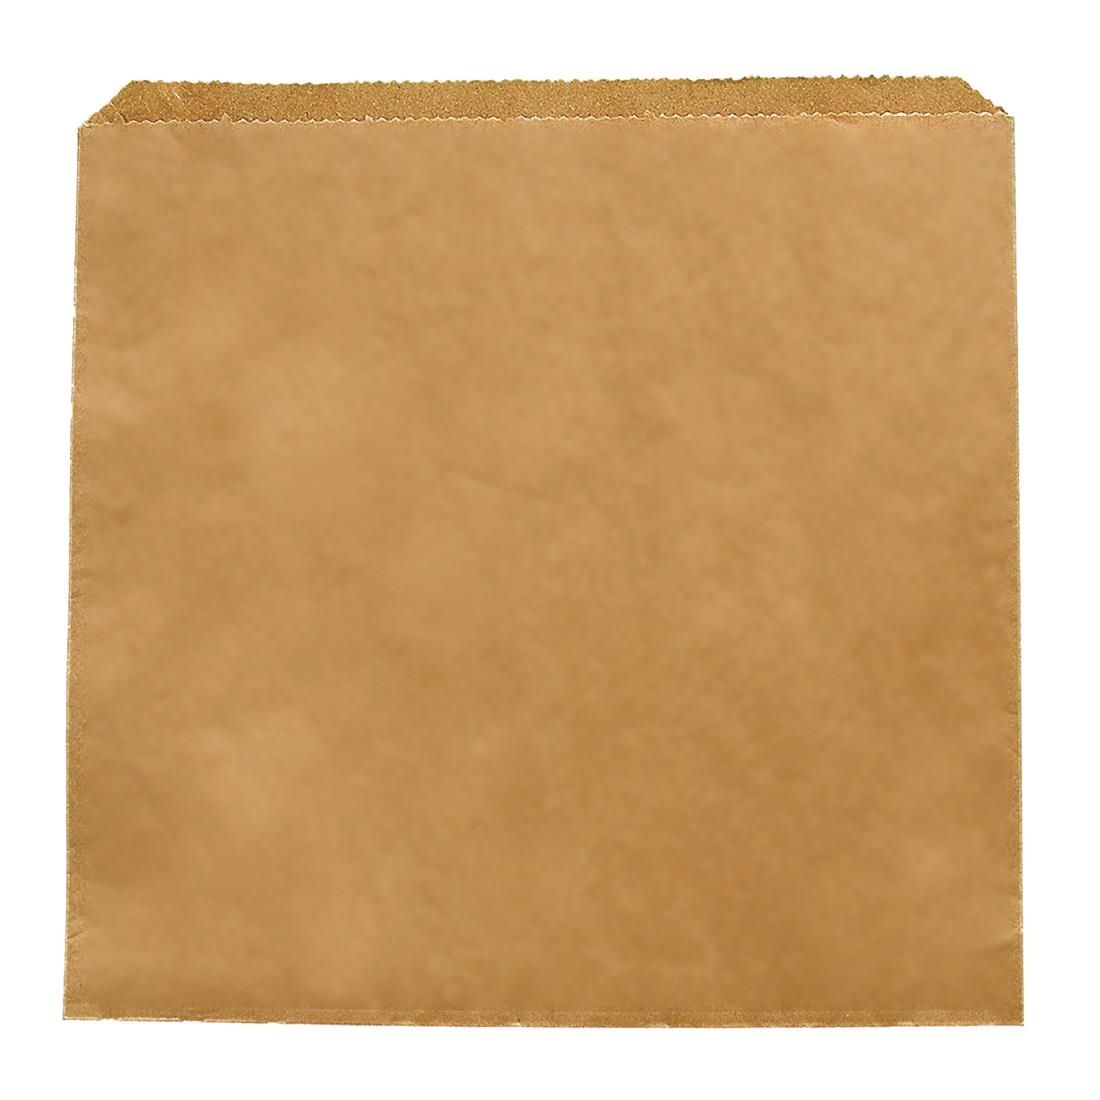 Fiesta Brown Paper Counter Bags Large (Pack of 1000) - CN757 Paper Bags Fiesta   